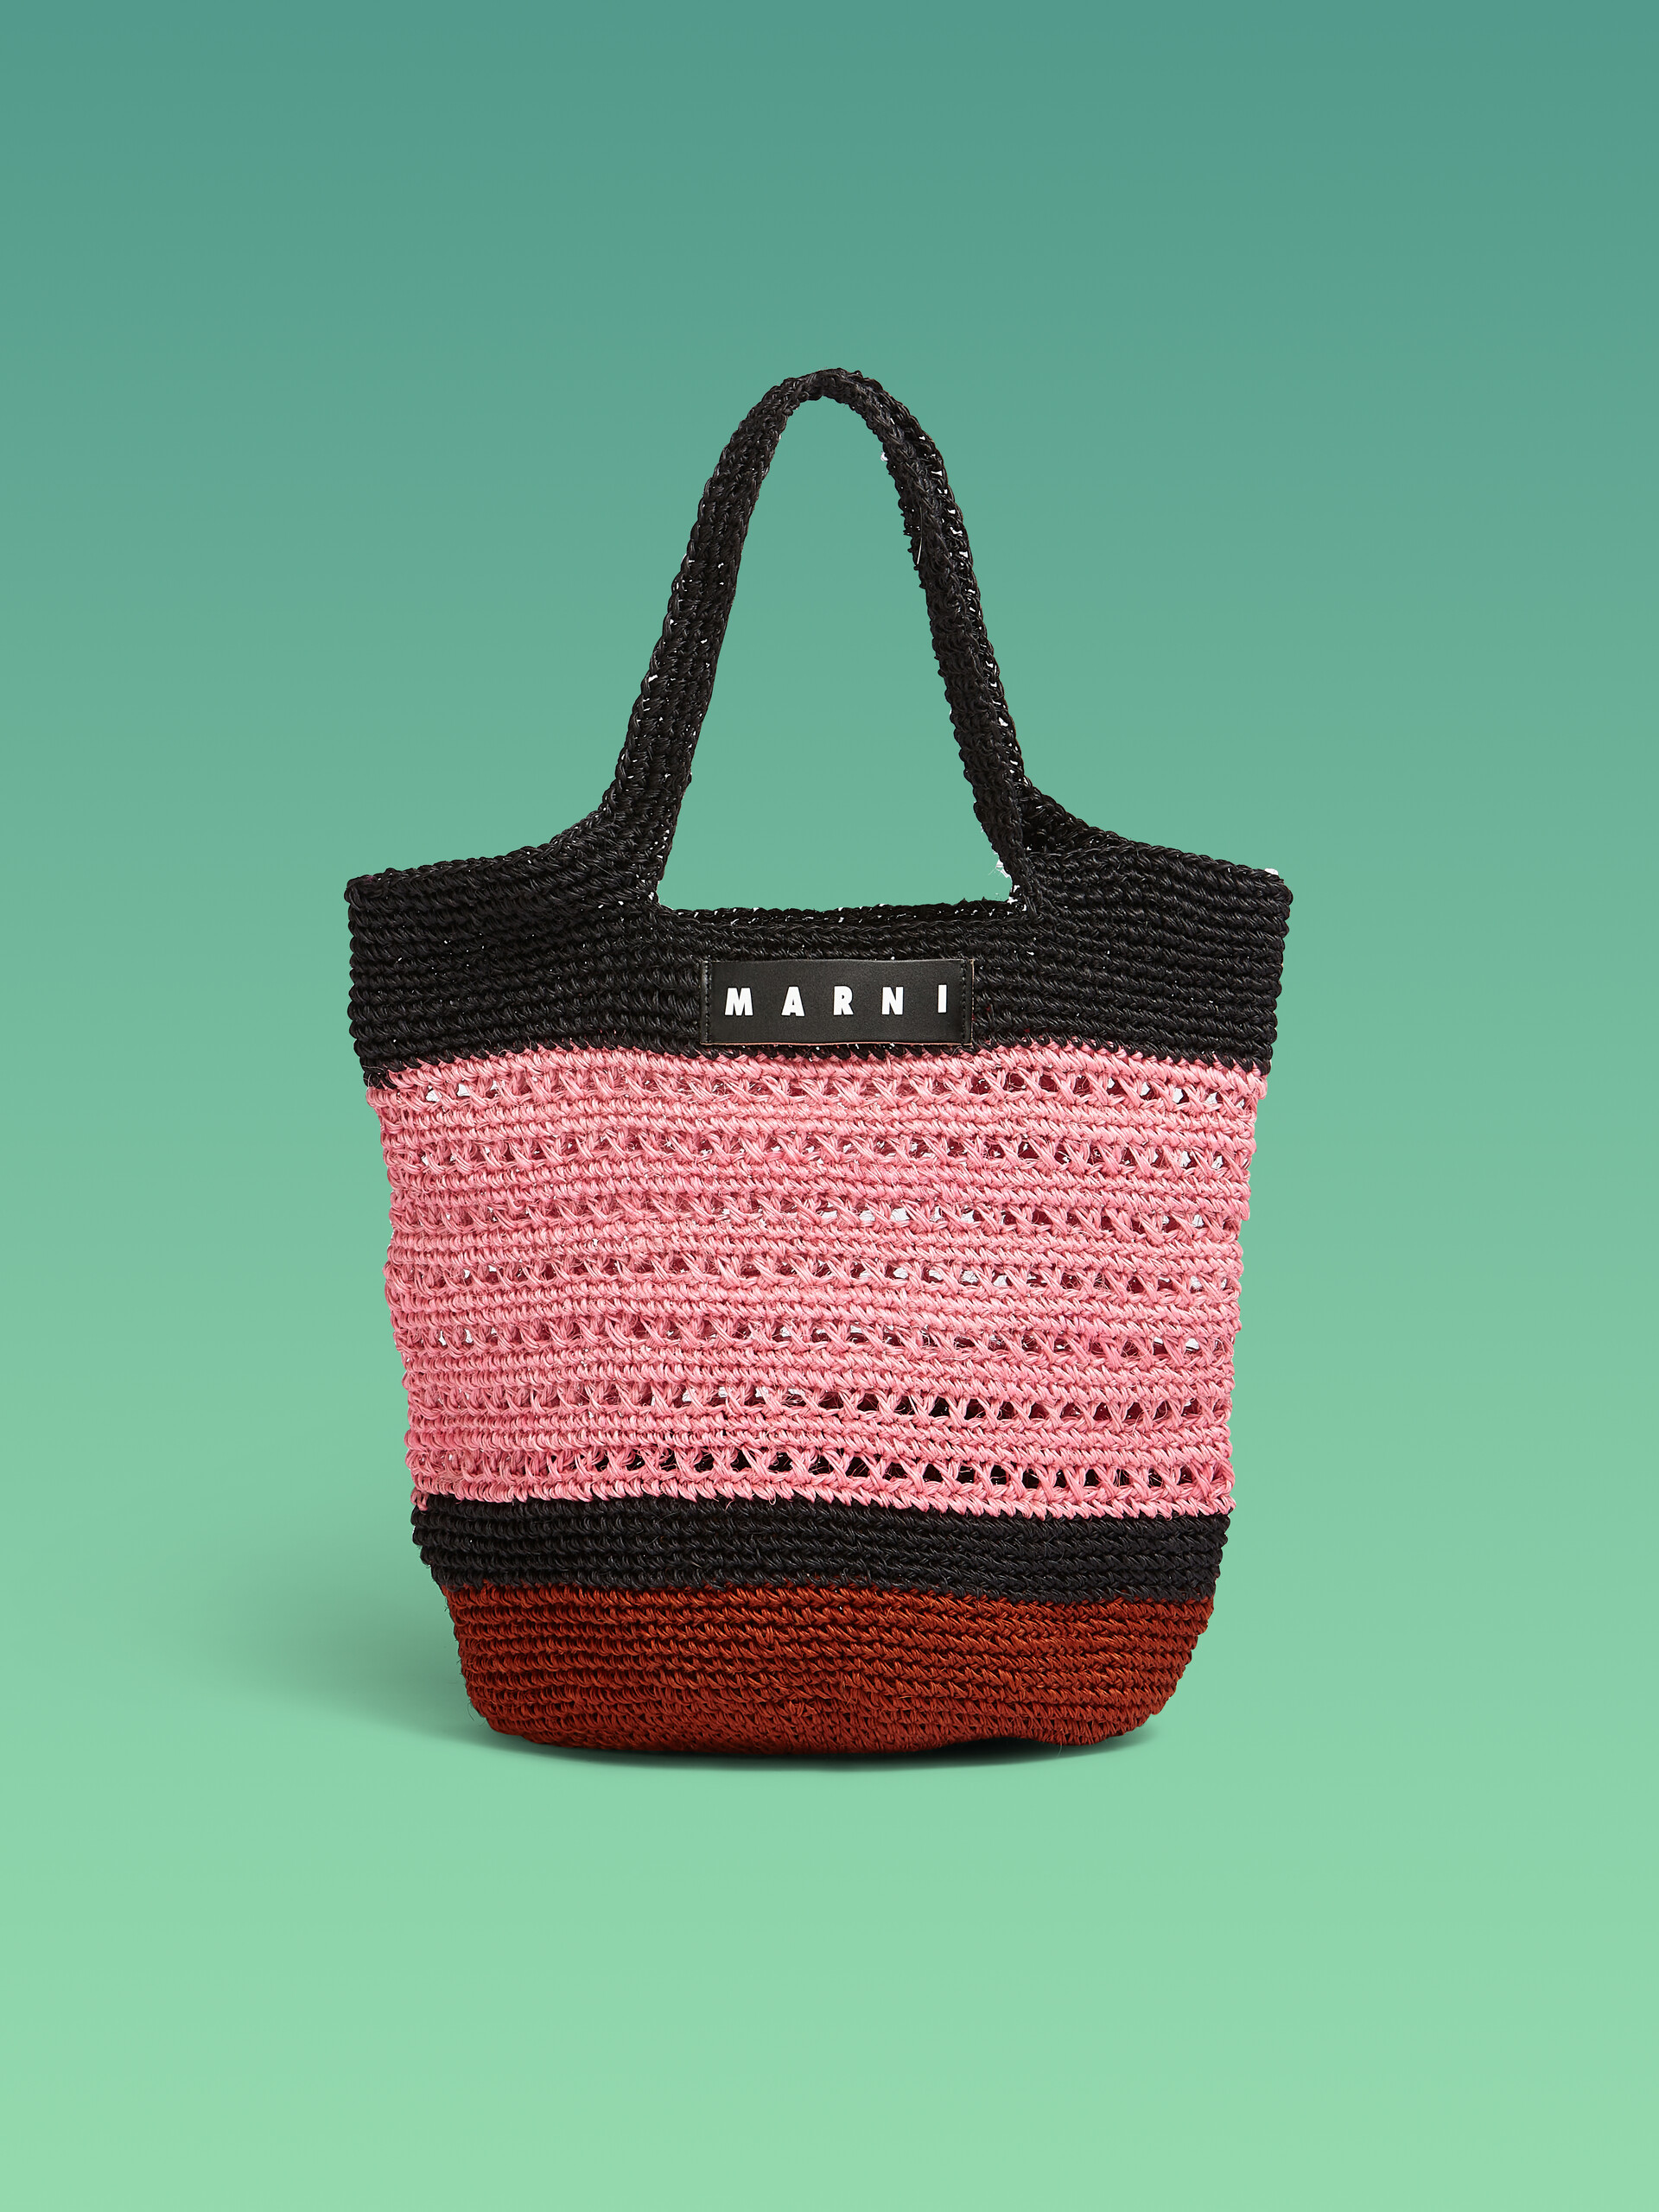 MARNI MARKET bag in pink and black natural fiber - Bags - Image 1